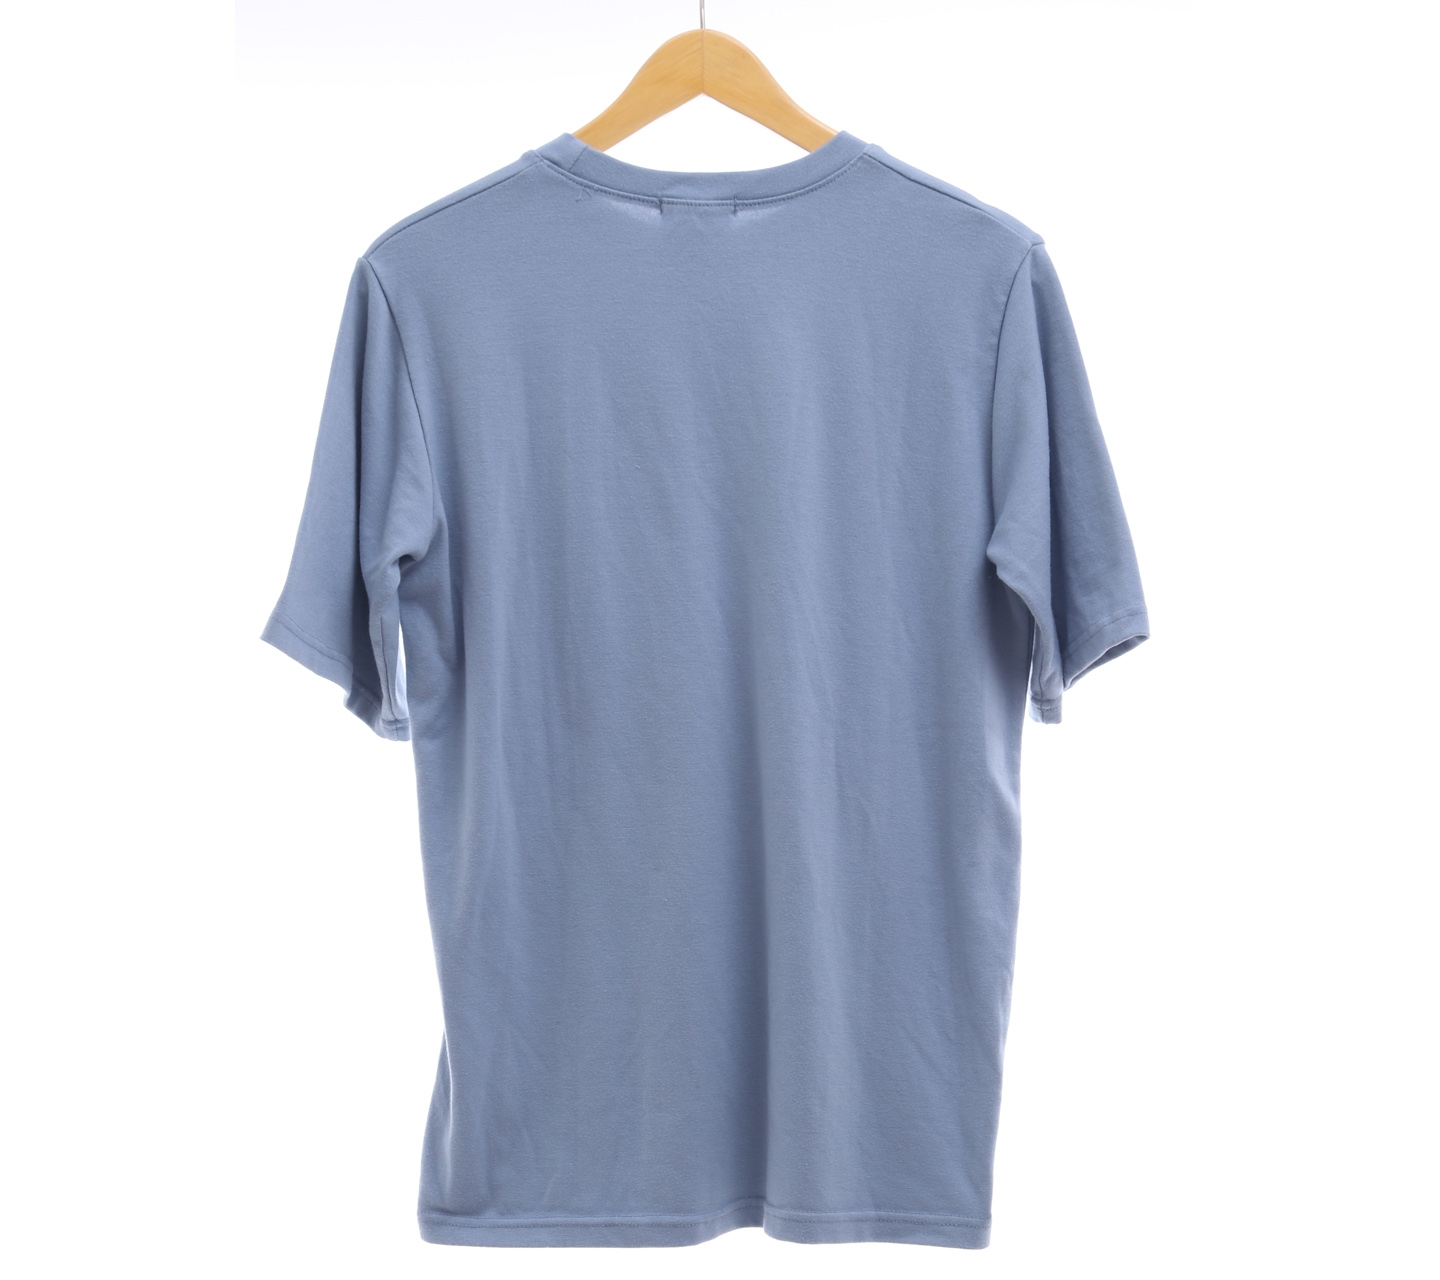 Able & Co Blue T-Shirt